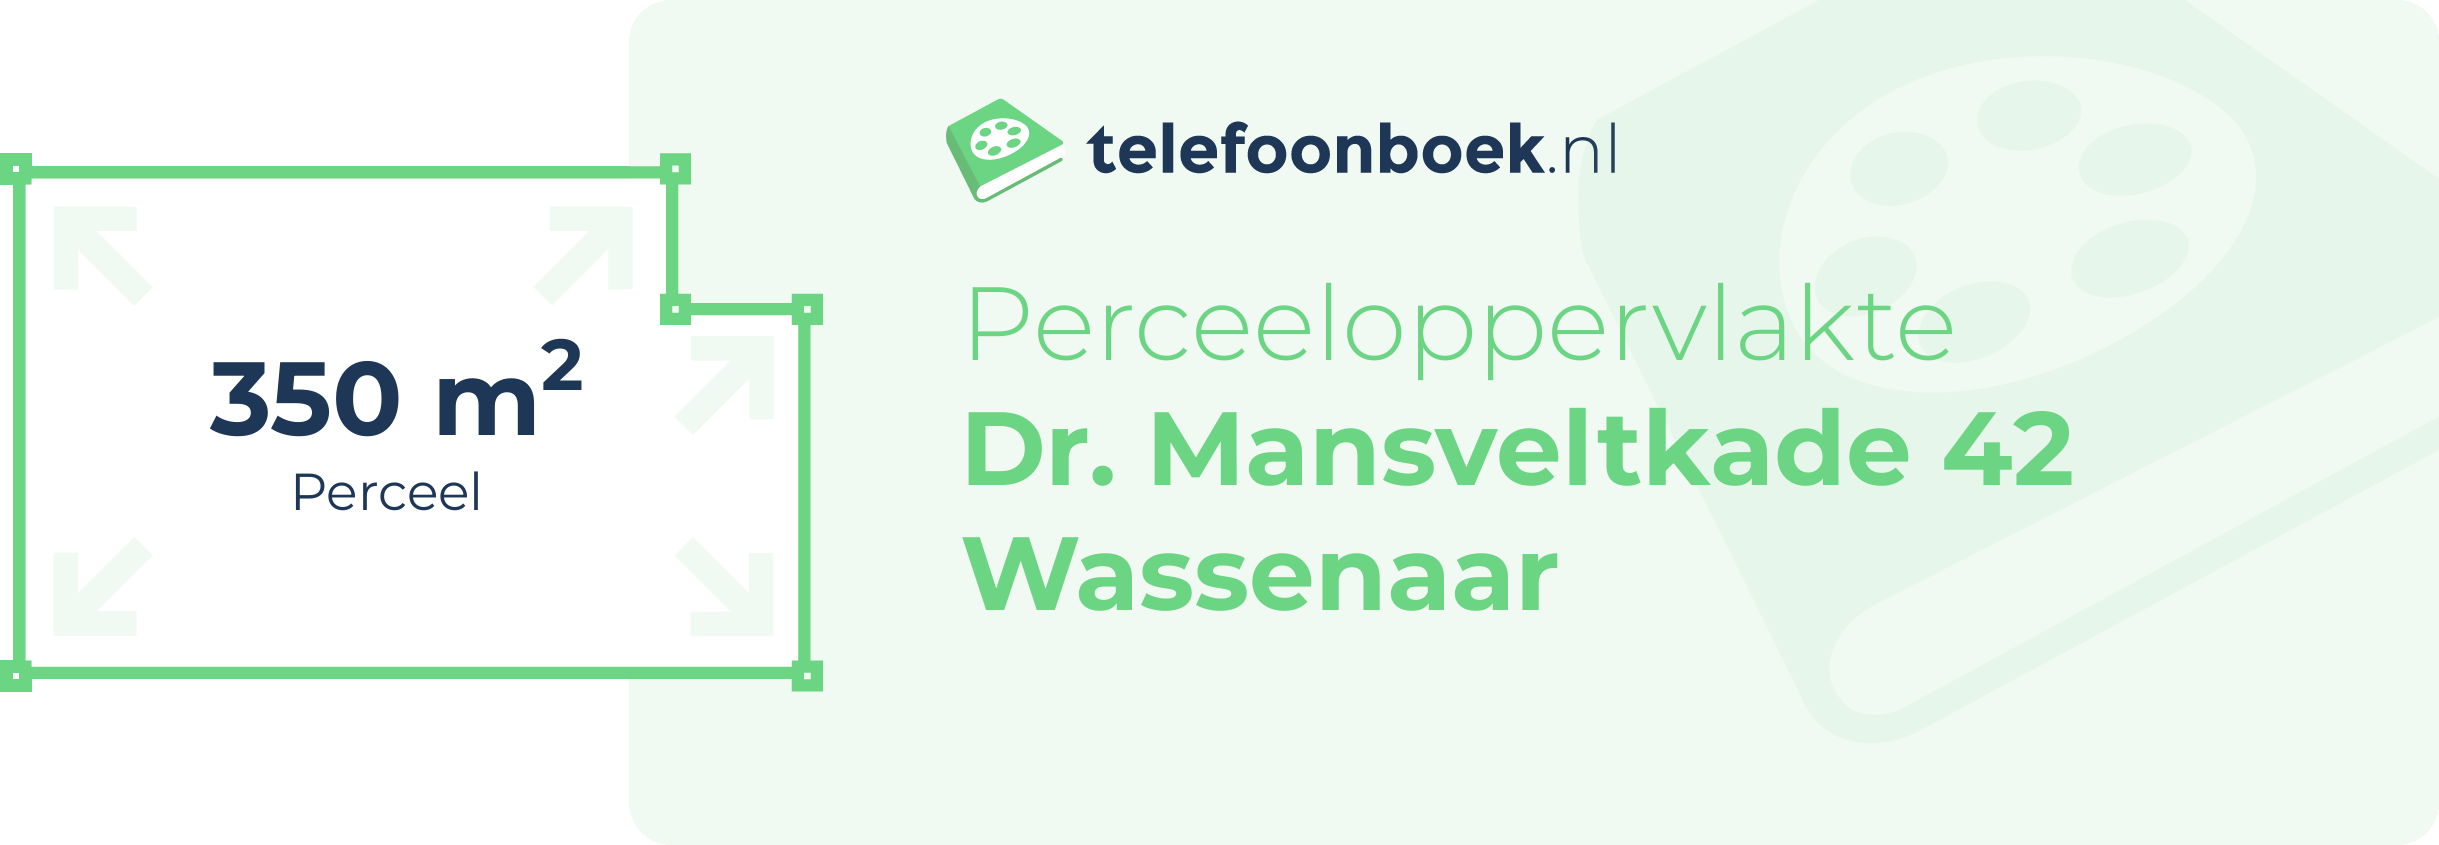 Perceeloppervlakte Dr. Mansveltkade 42 Wassenaar